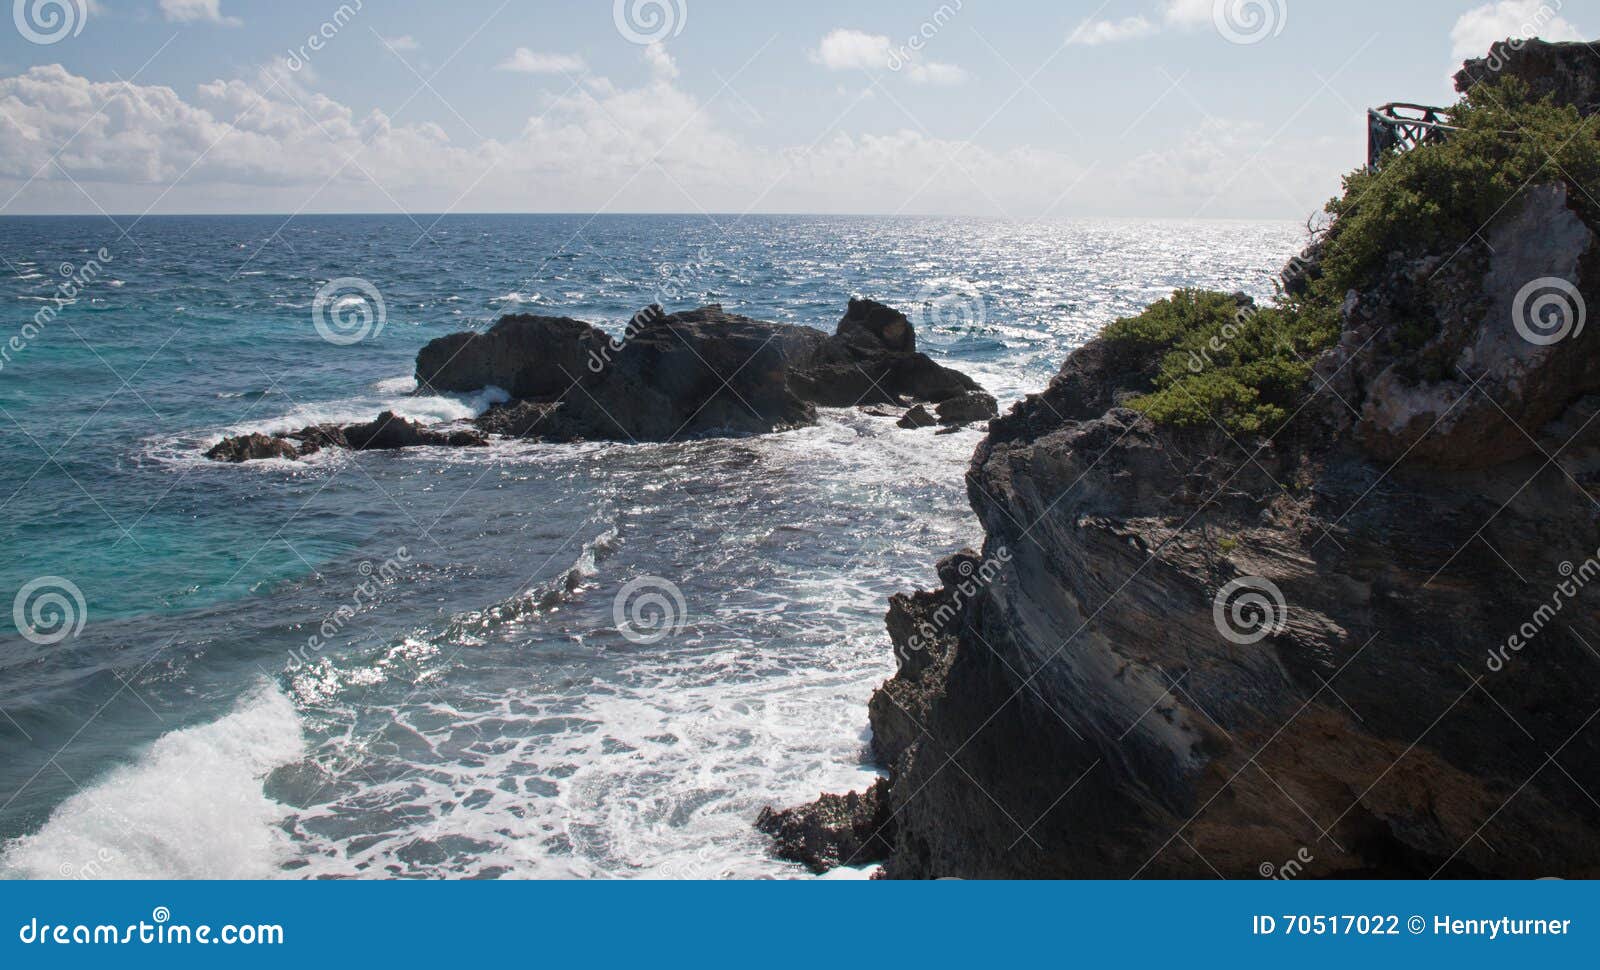 isla mujeres island - punta sur point also called acantilado del amanecer cliff of the dawn